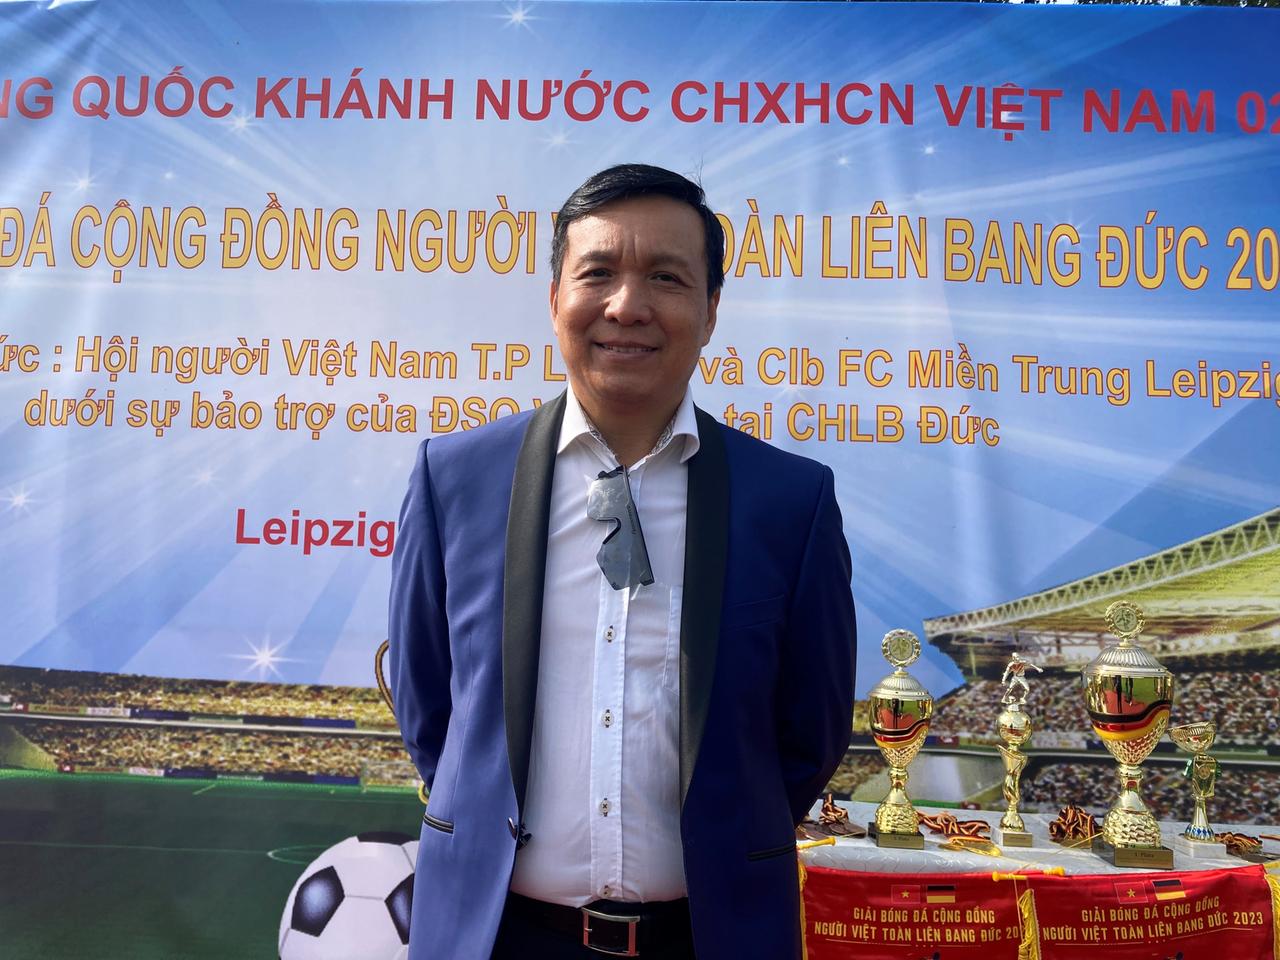 Hoang Van Thanh hat das Turnier organisiert.